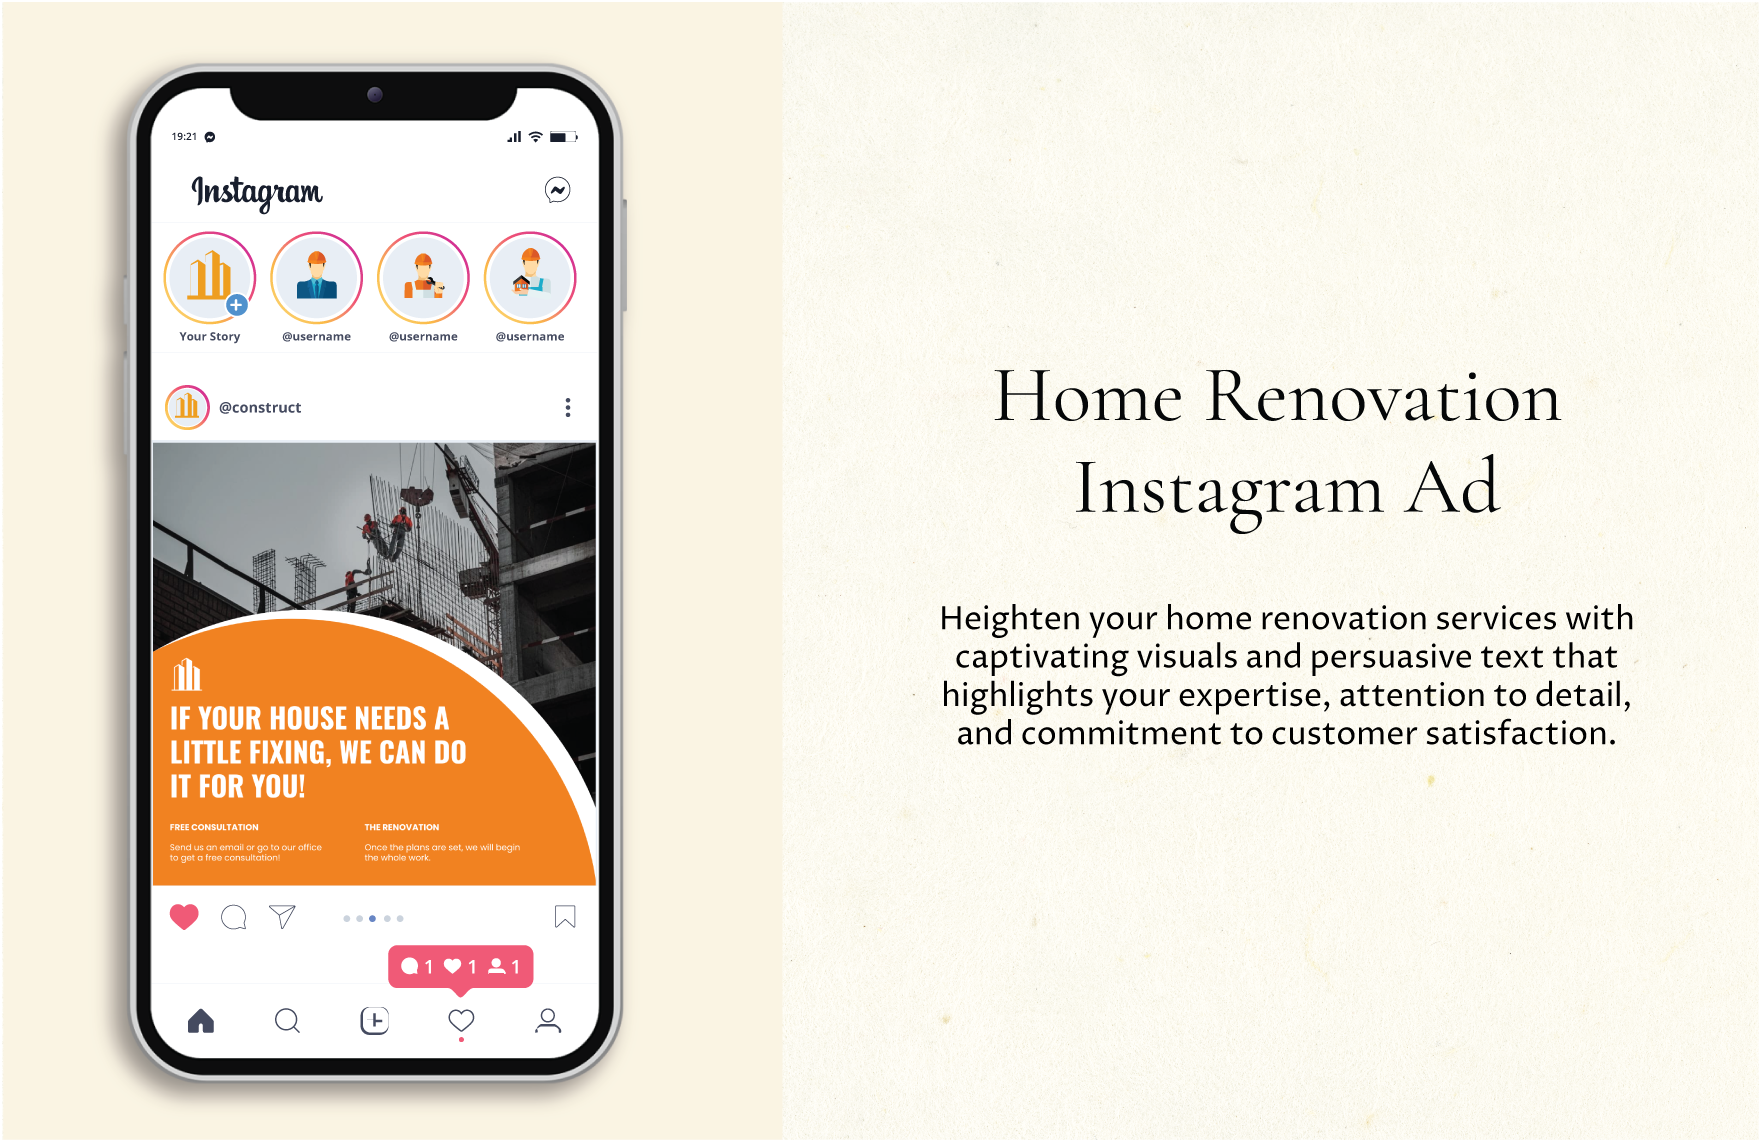 Home Renovation Instagram Ad